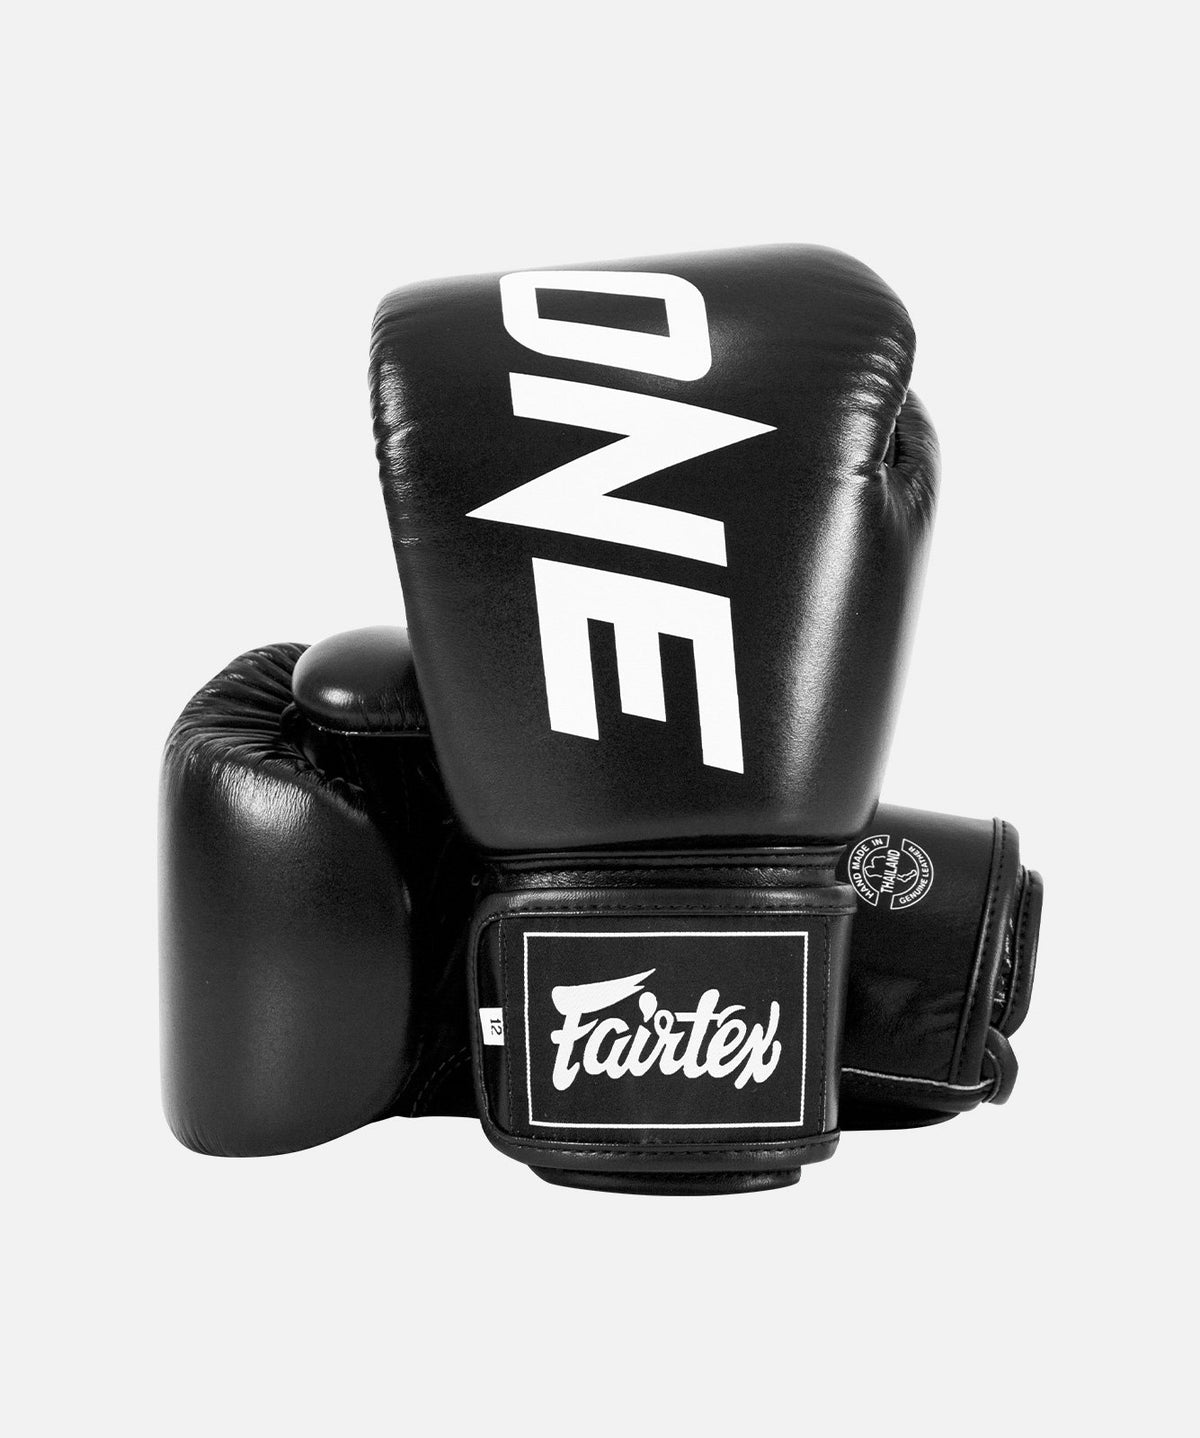 ONE x Fairtex Tight-Fit Boxing Glove (Black) ONE Championship